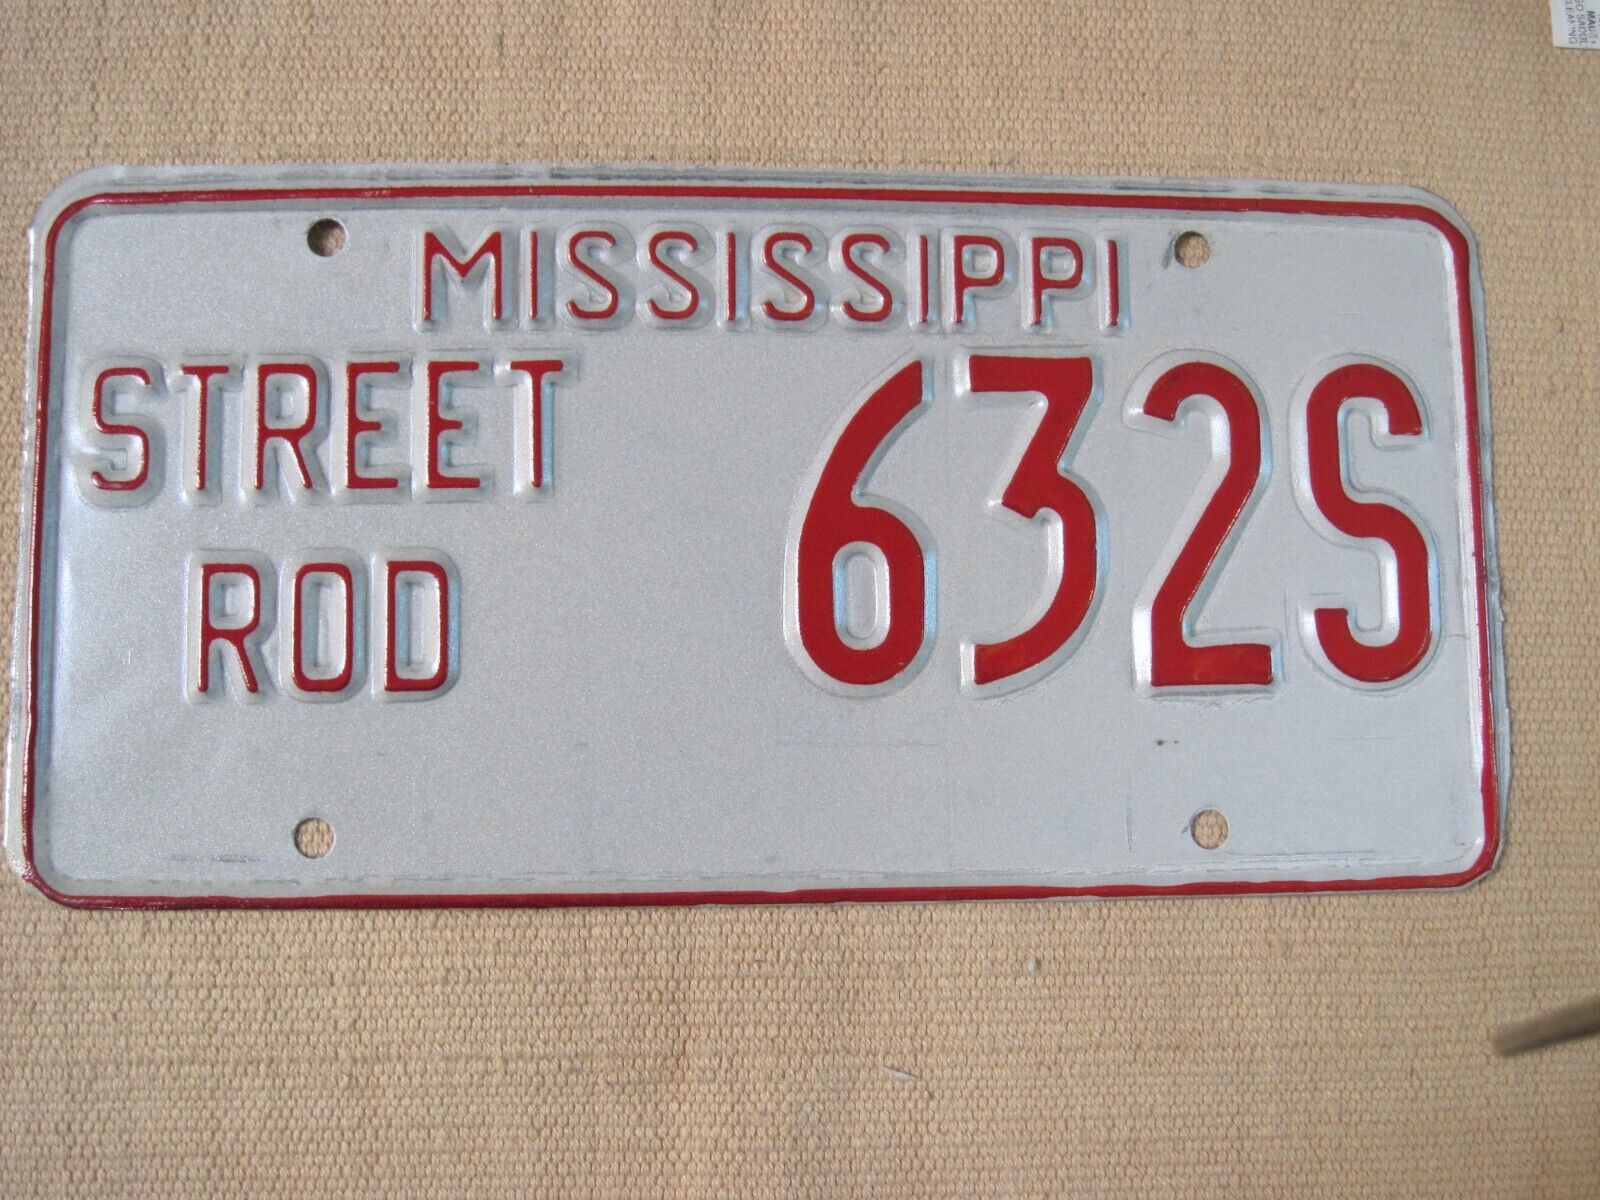 Mississippi Street Rod Embosssed license plate.